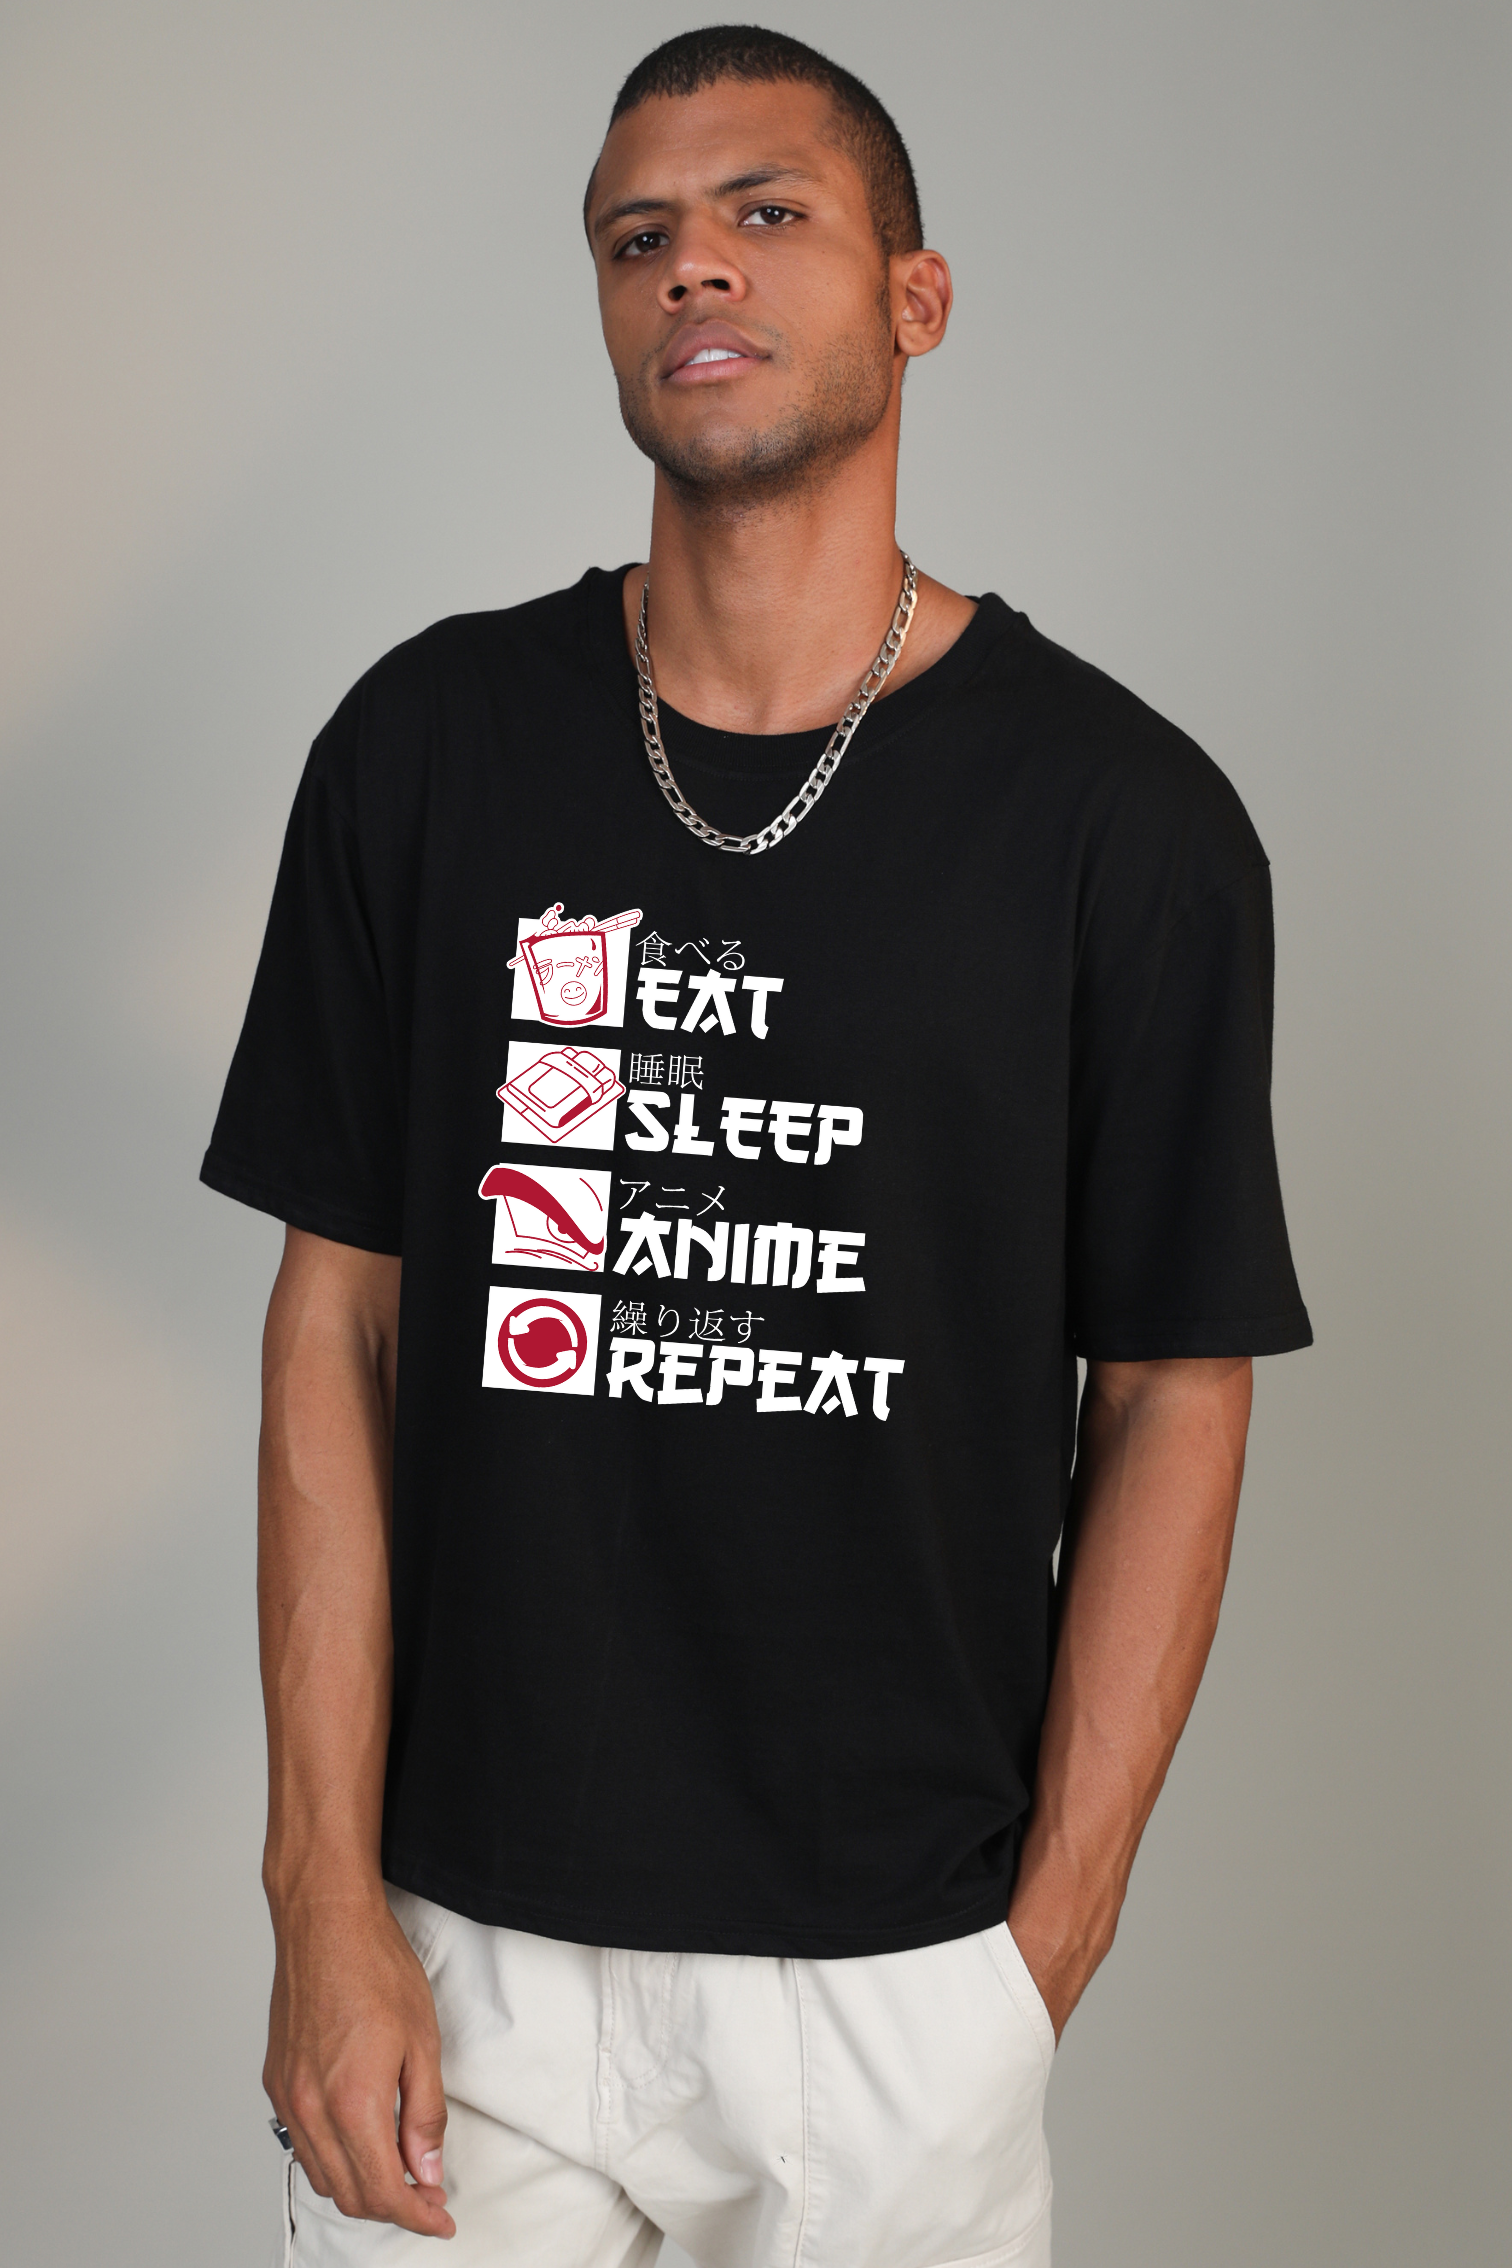 Eat-Sleep-Anime-Repeat- Oversized t-shirt